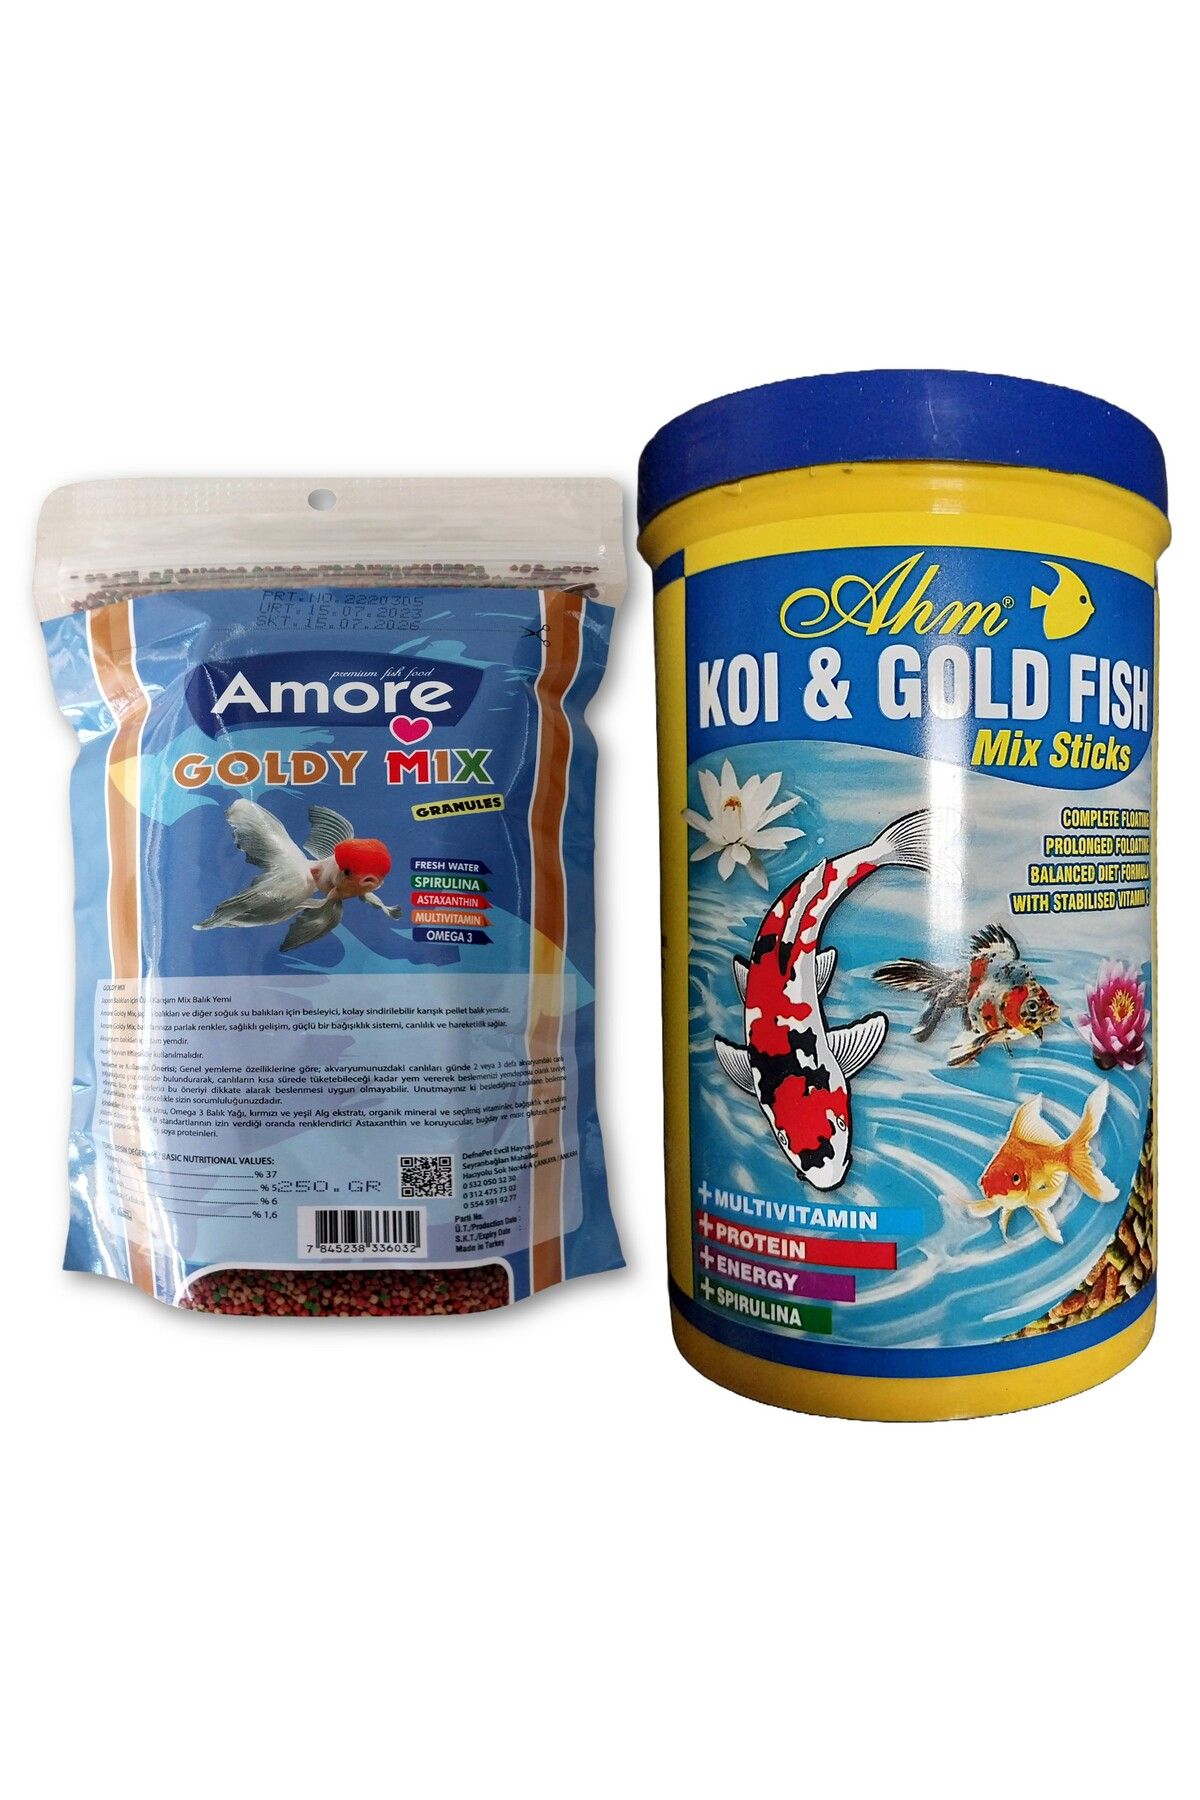 Amore Goldy Mix %37 Protein 250 Gr Easy-fill-pack Poşet, 1000ml Ahm Koi Mix Pond Sticks Balık Yemi